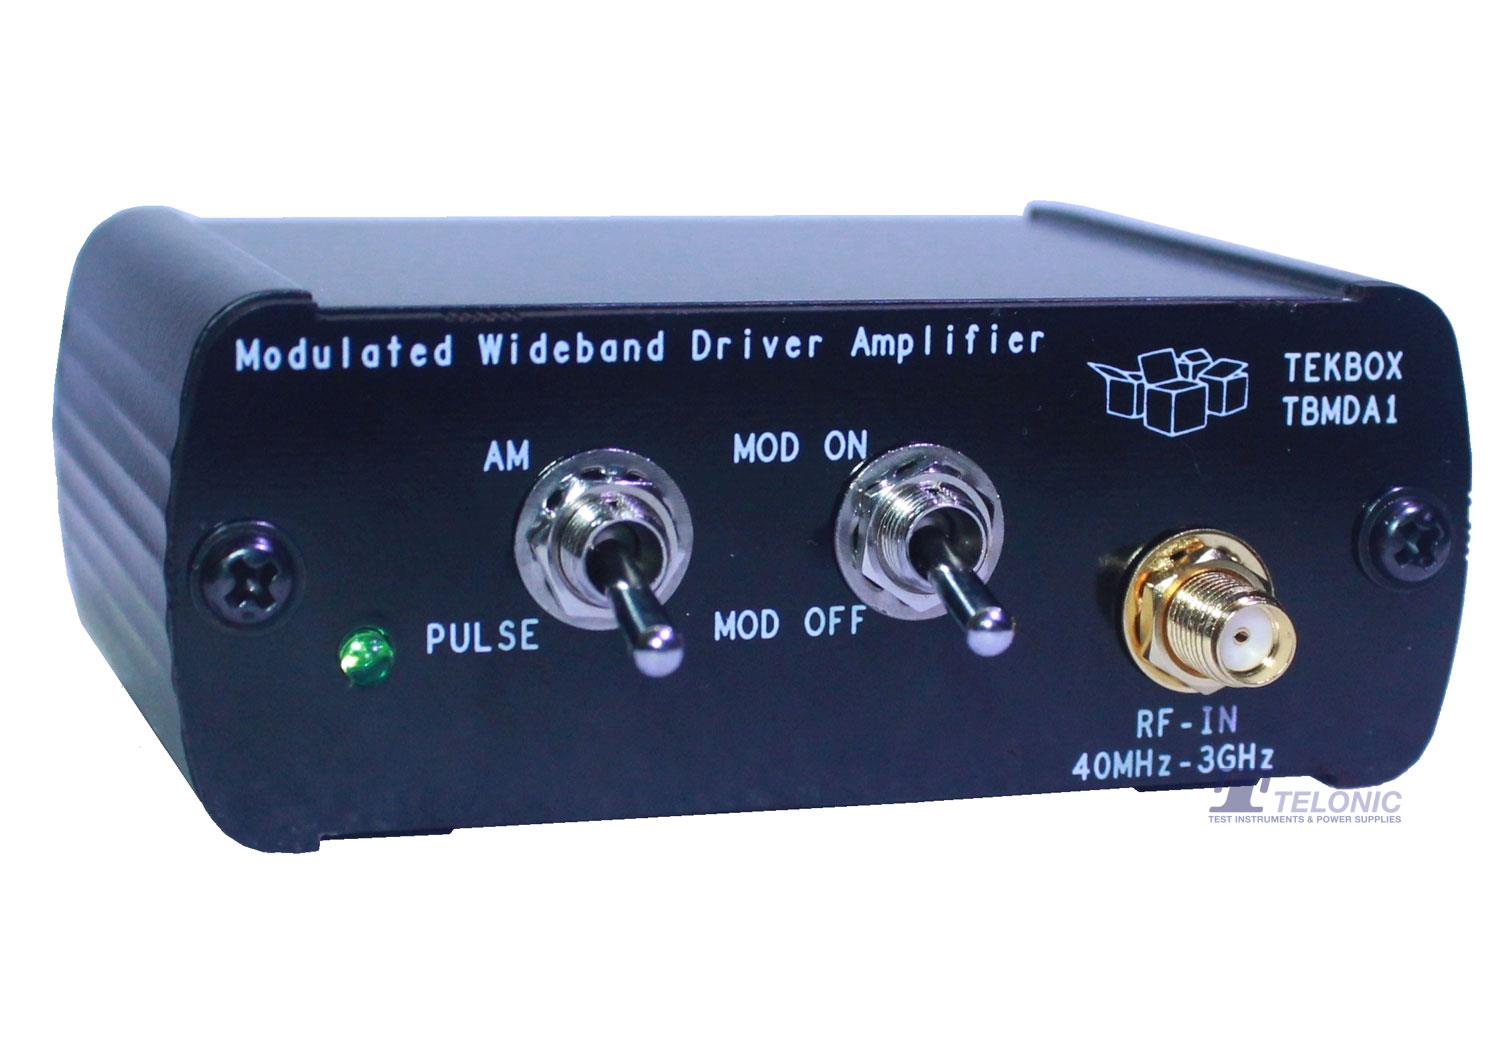 TEKBOX TBMDA1 Modulated Wideband Driver Amplifier